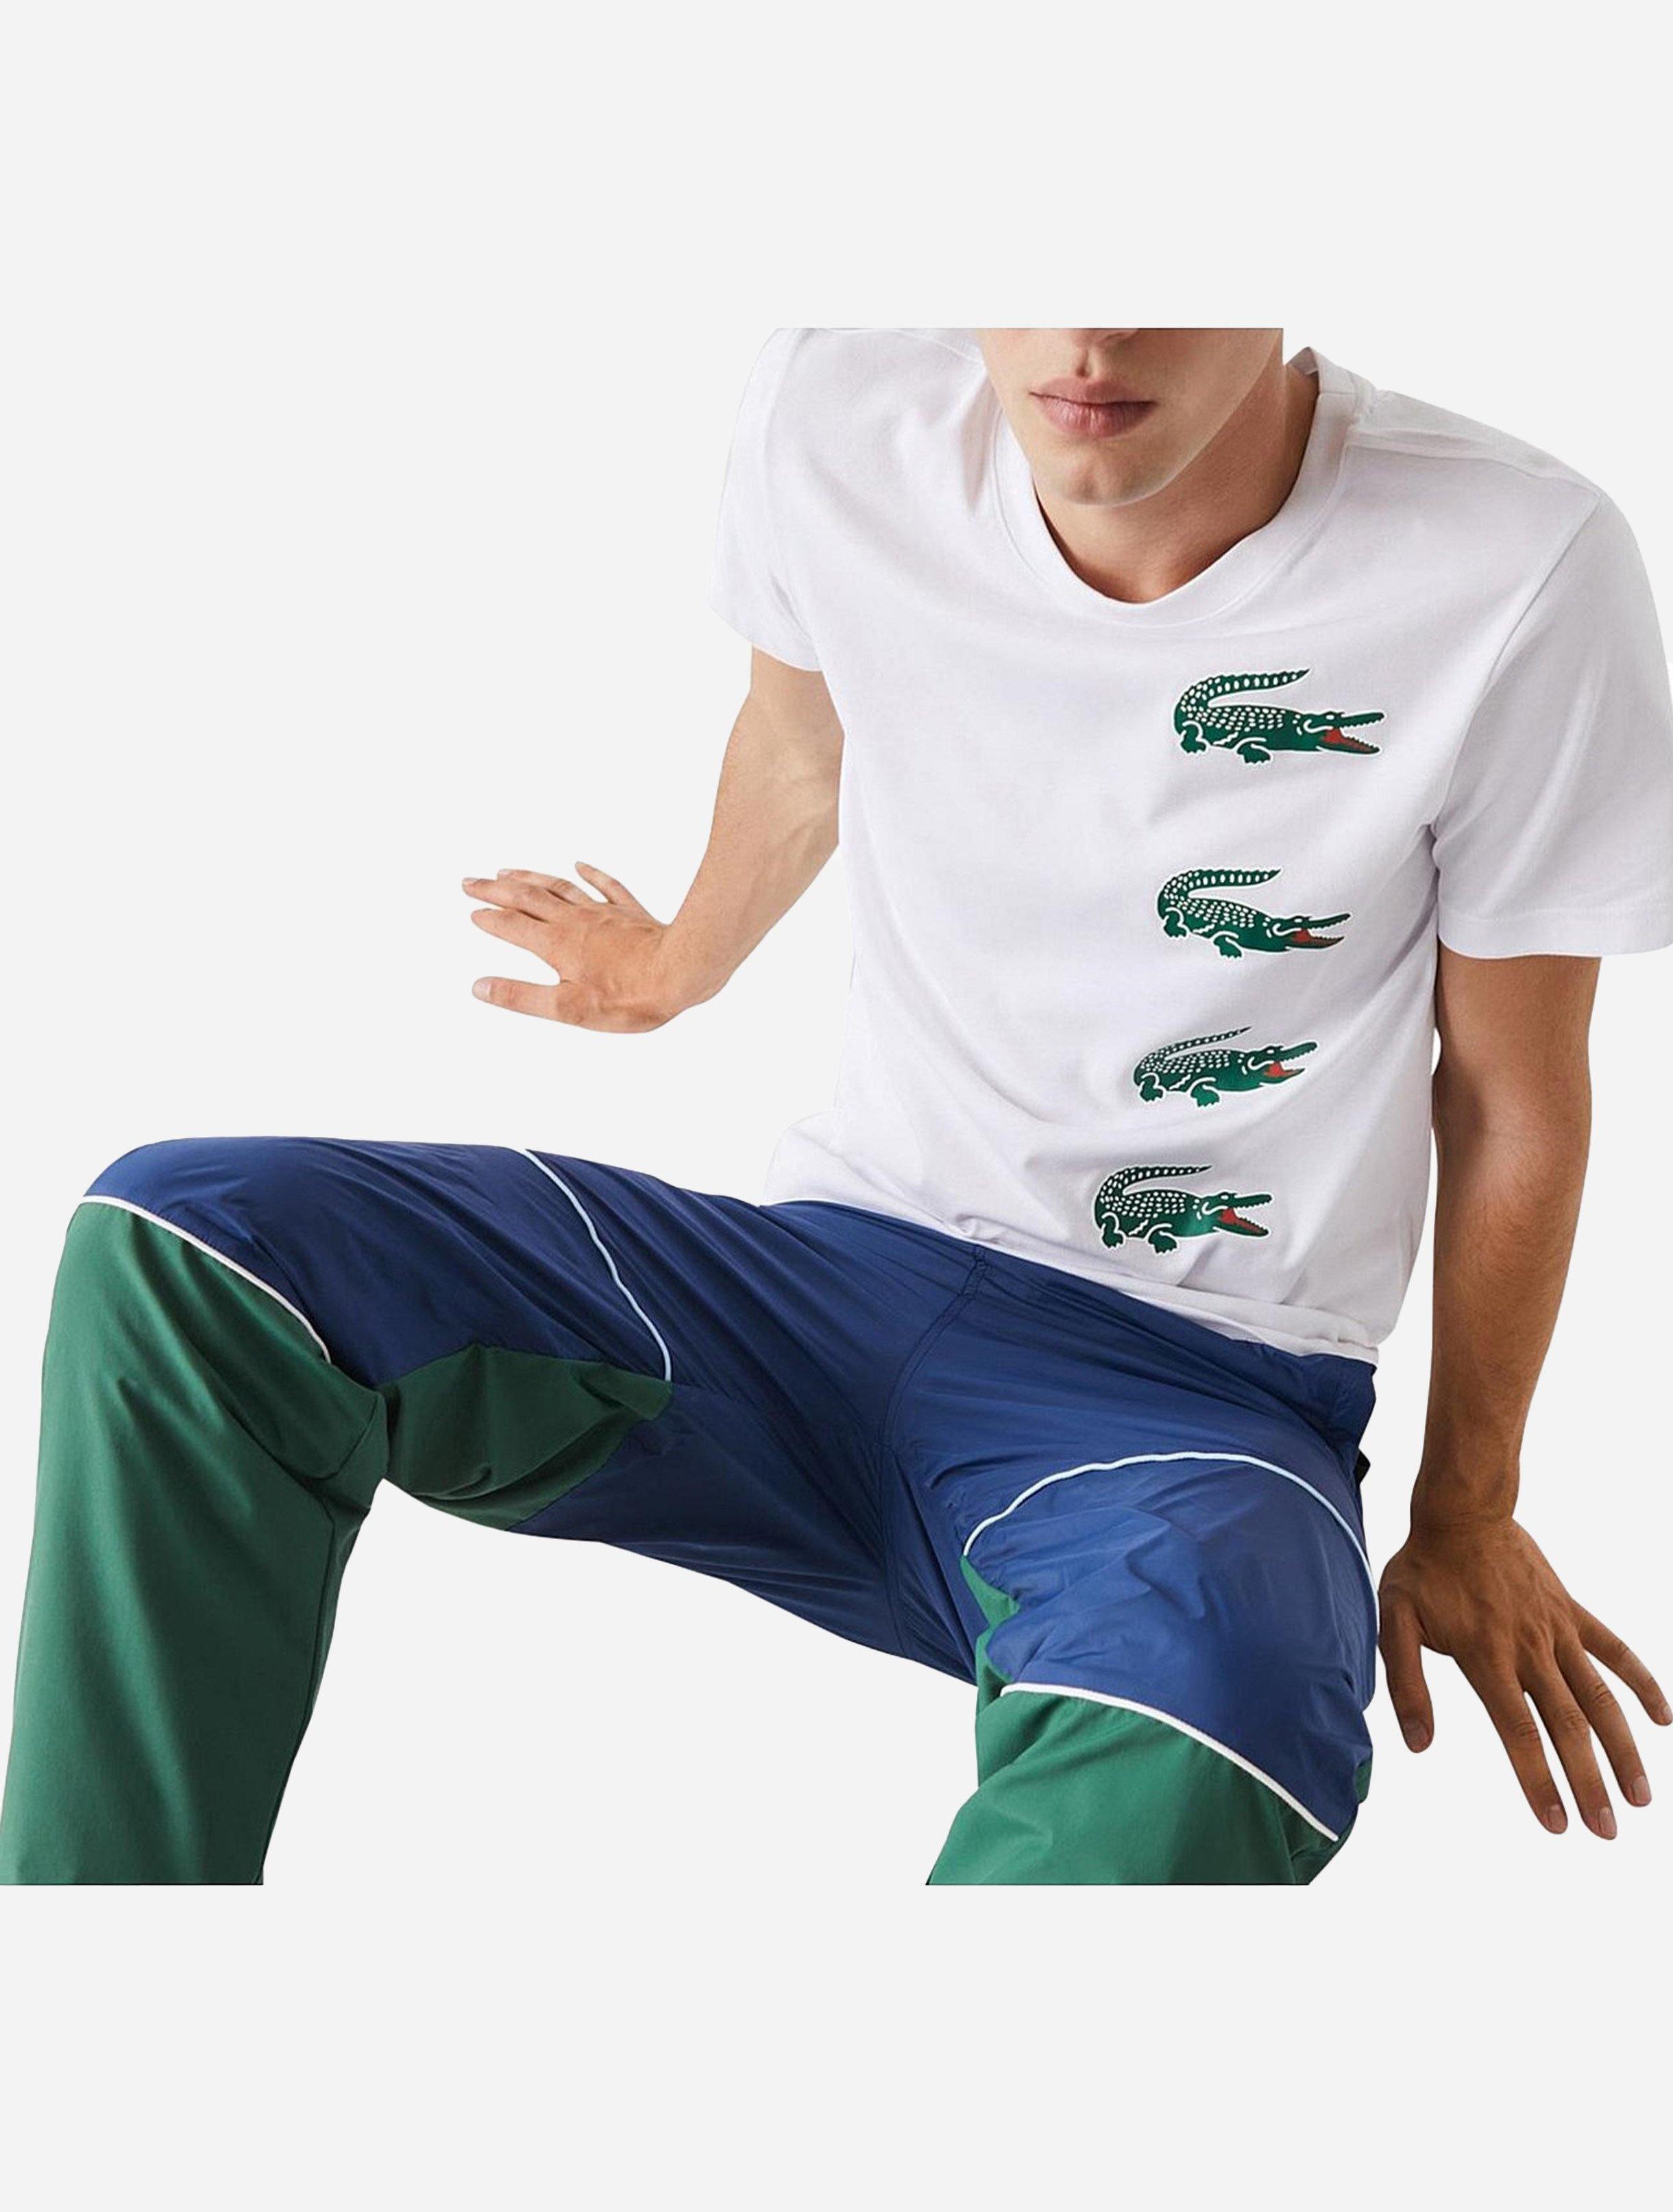 Lacoste Lifestyle Multicroc T-Shirt - Challenger Streetwear